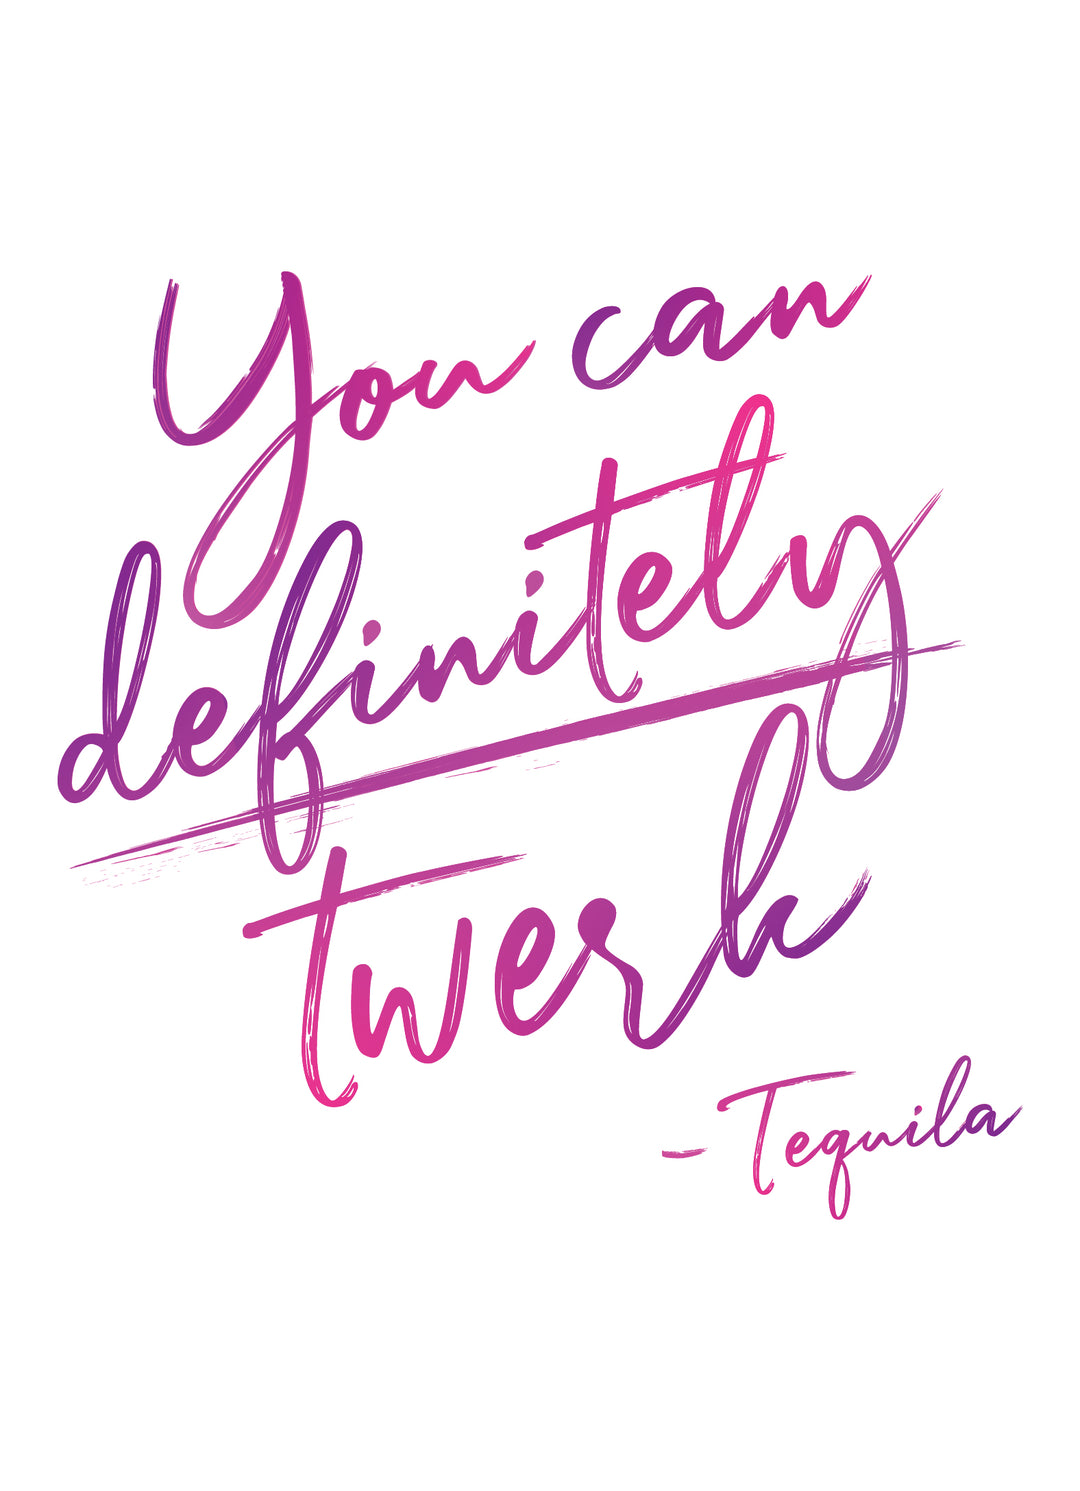 Card in pink handwriting font saying you can definitely twerk -Tequila by Nikki Neri